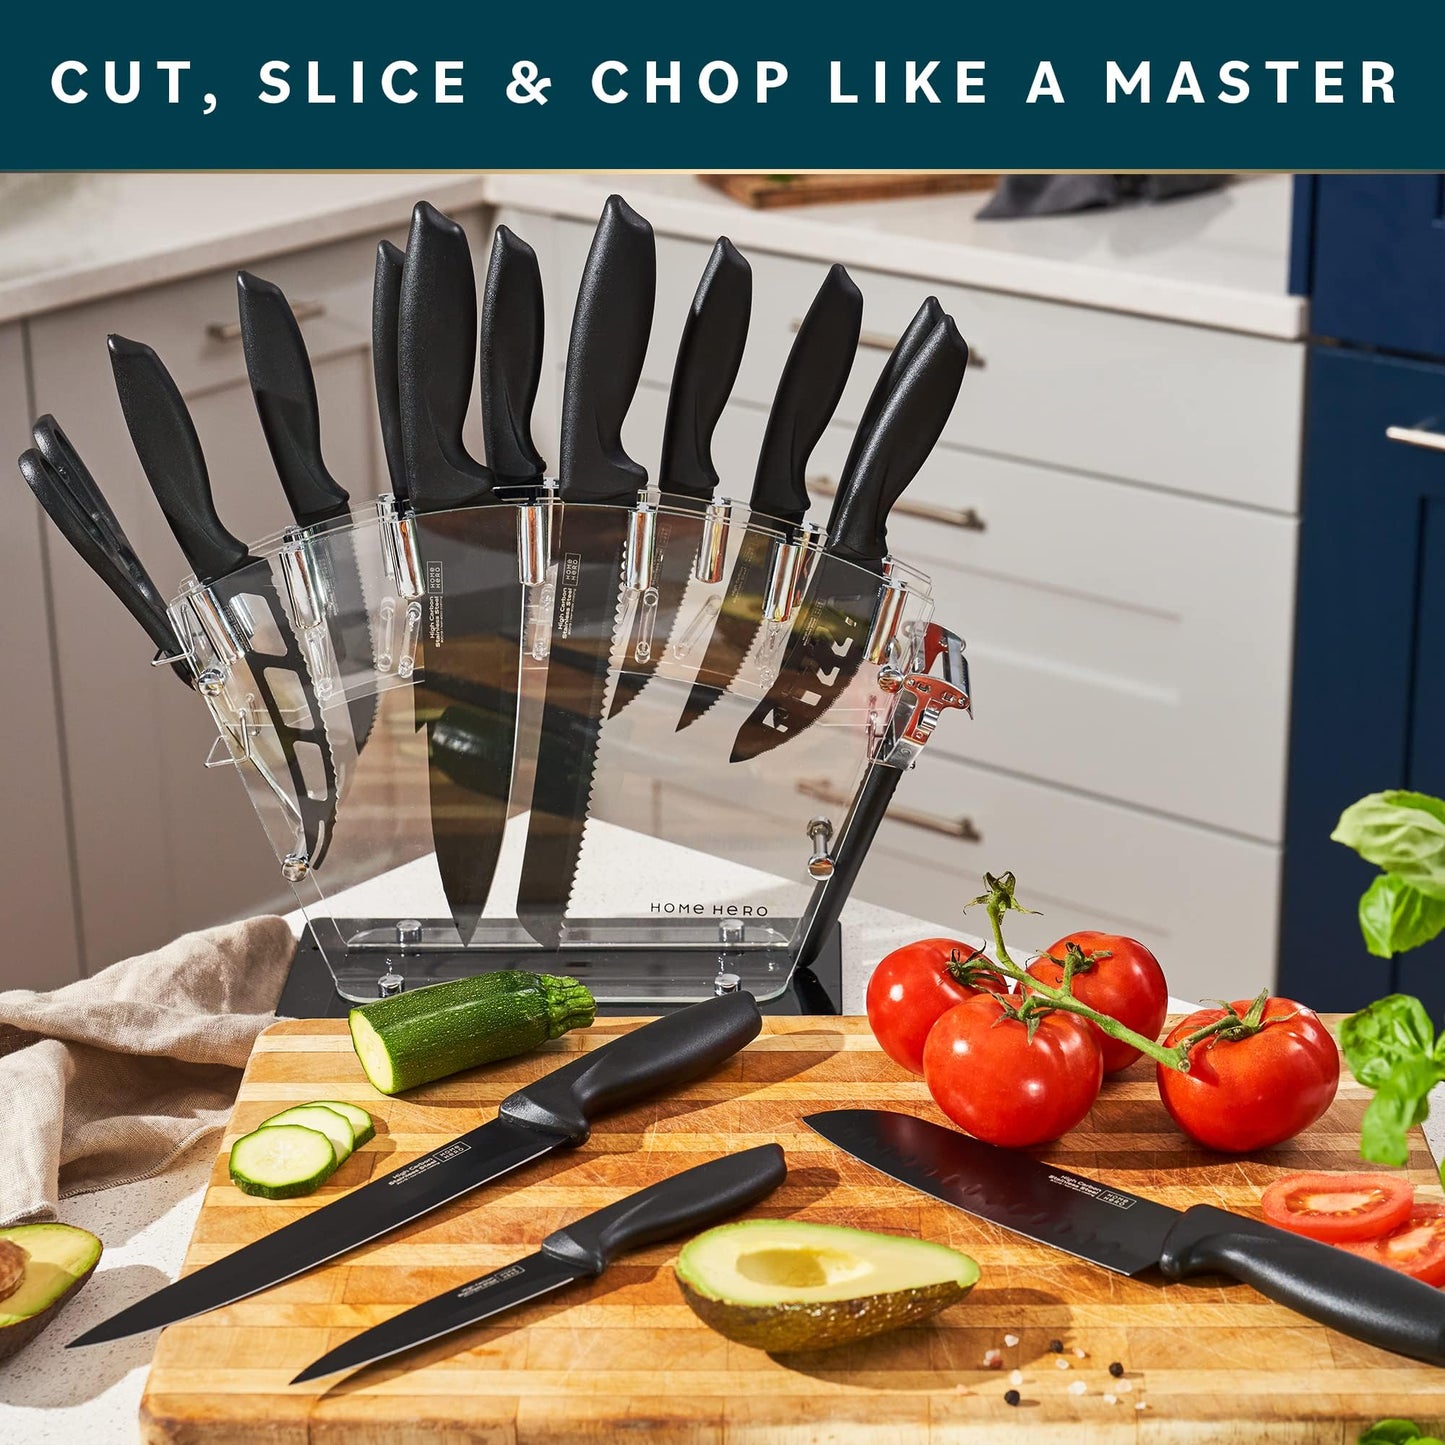 Home Hero 20 Pcs Kitchen Knife Set, Chef Knife Set & Steak Knives - Professional Design Collection - Razor-Sharp High Carbon Stainless Steel Knives with Ergonomic Handles (20 Pcs - Black)